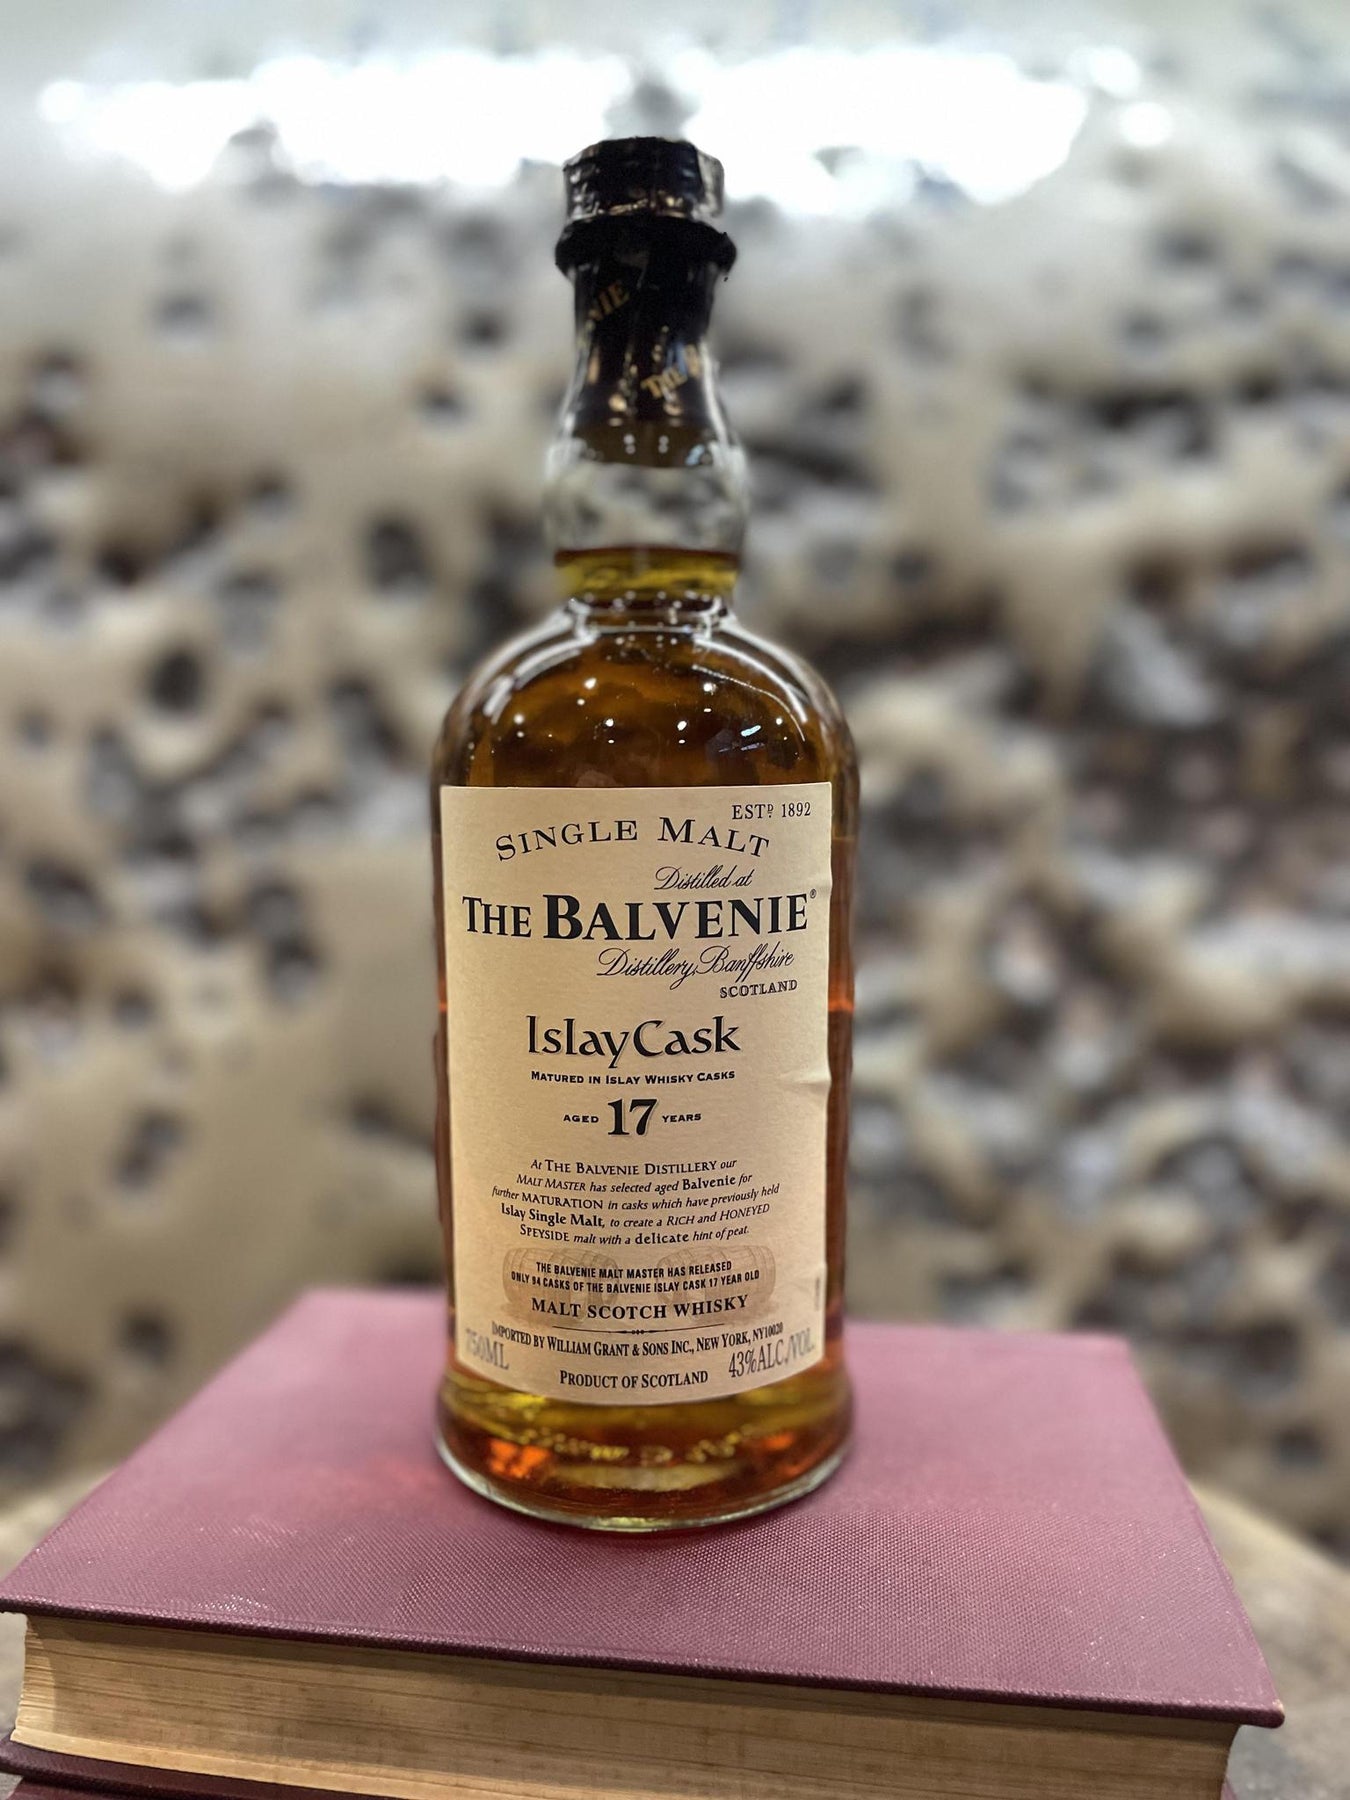 The Balvenie - Single Malt Scotch Whisky Crafted in Speyside